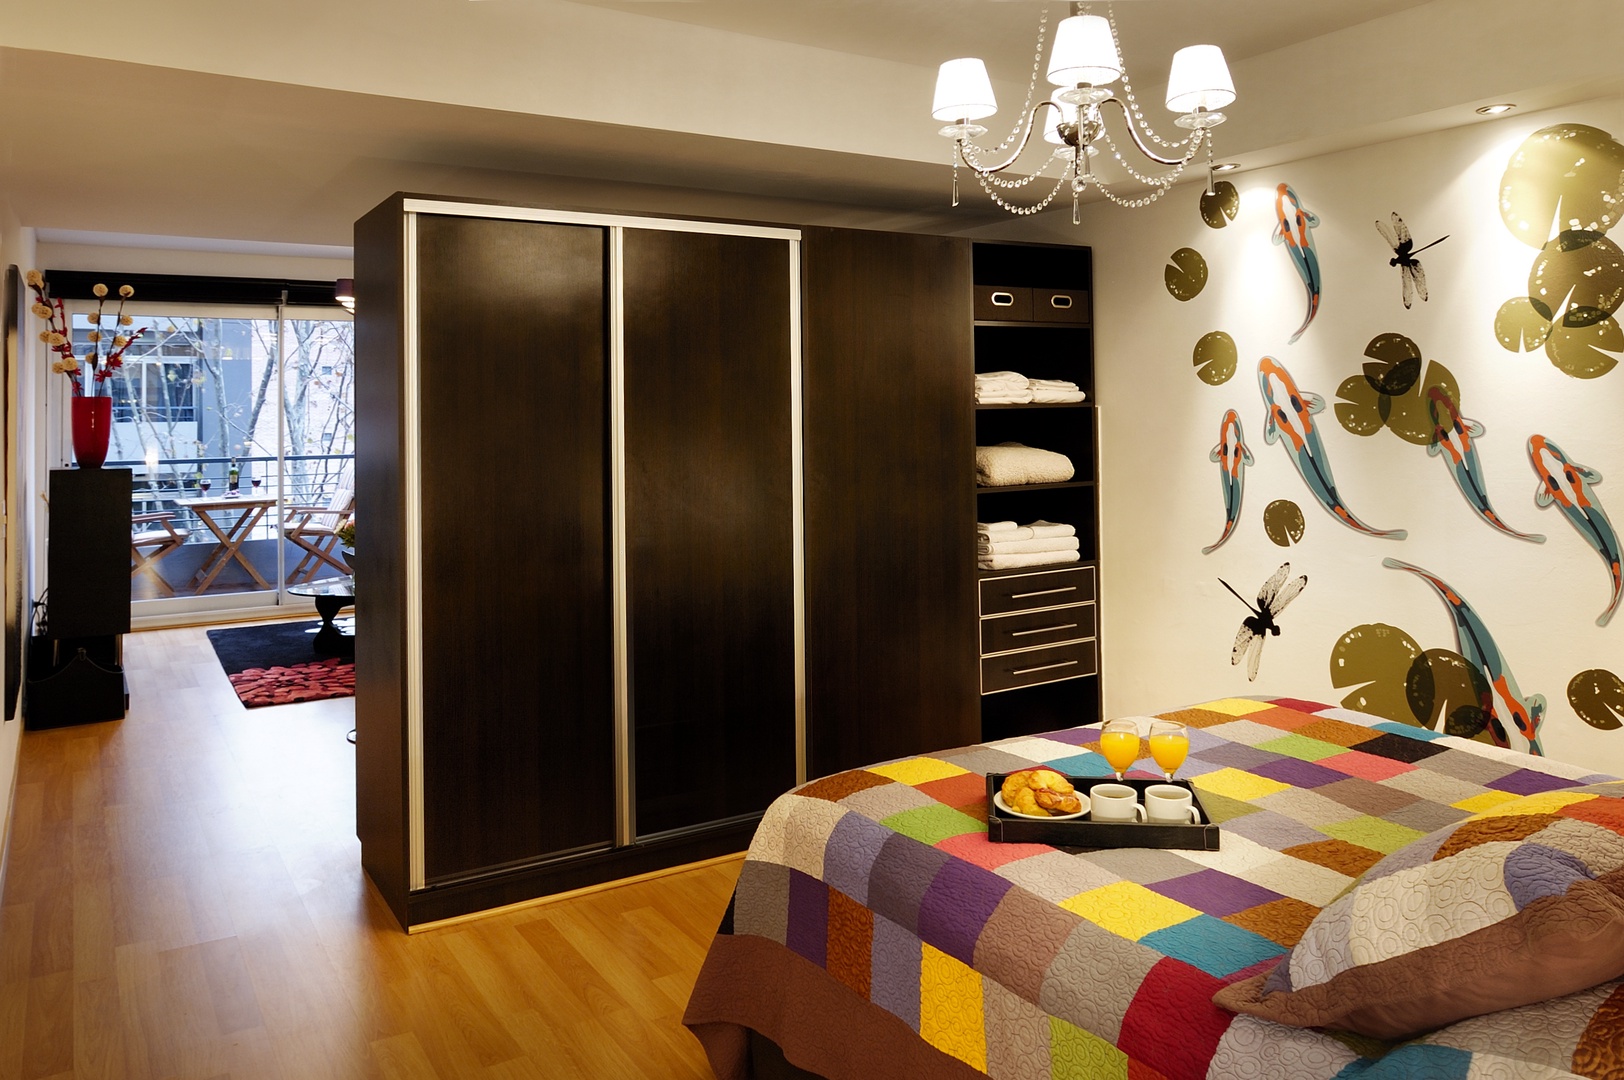 Luxurious open bedroom with plenty of storage space